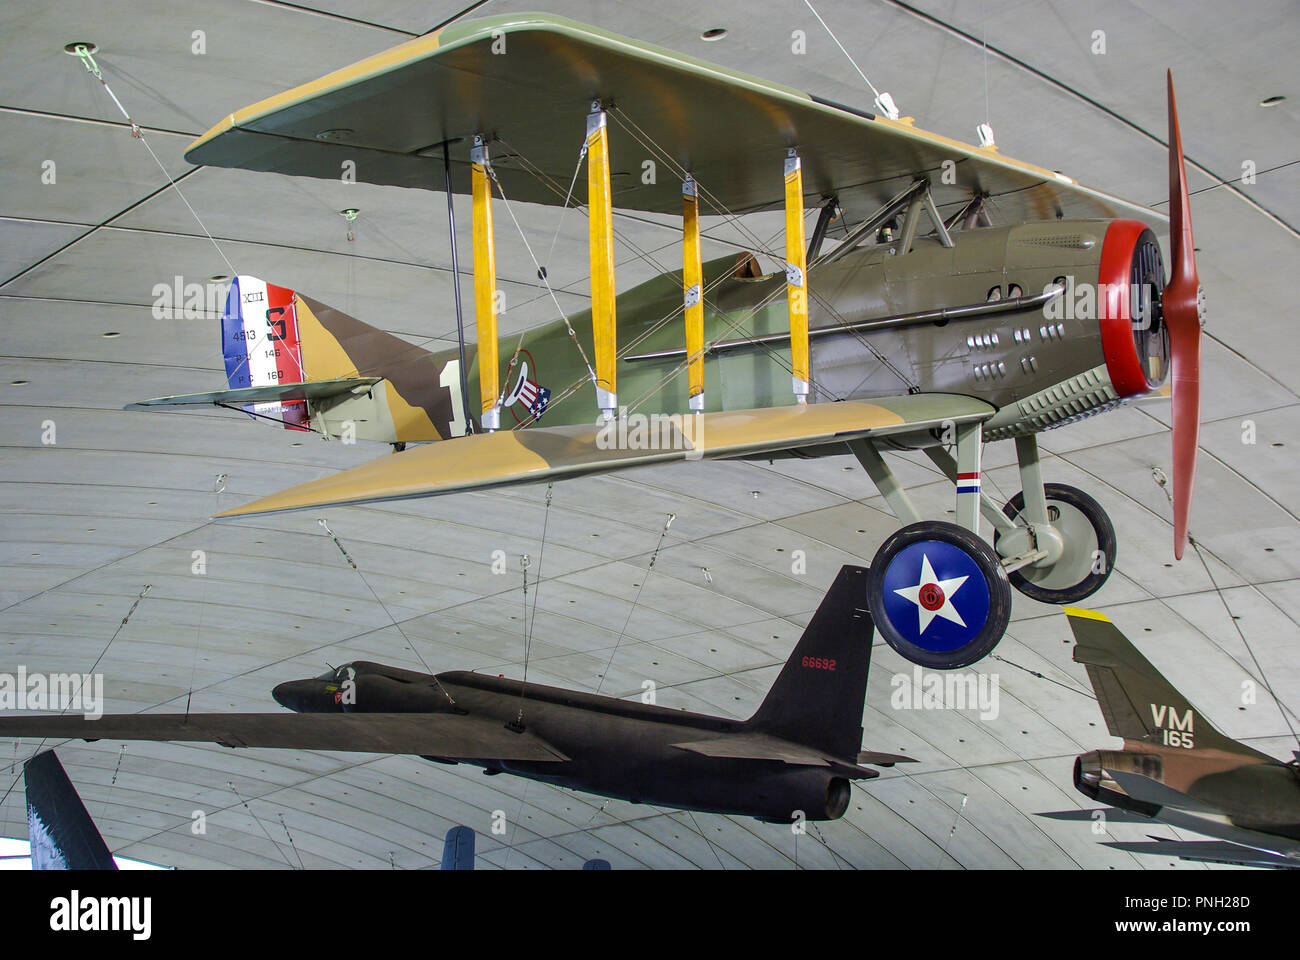 SPAD S.XIII. Französisches Doppelflugzeug des Ersten Weltkriegs, von Société Pour L’Aviation et ses Dérivés (SPAD). Im American Air Museum mit U-2 Stockfoto